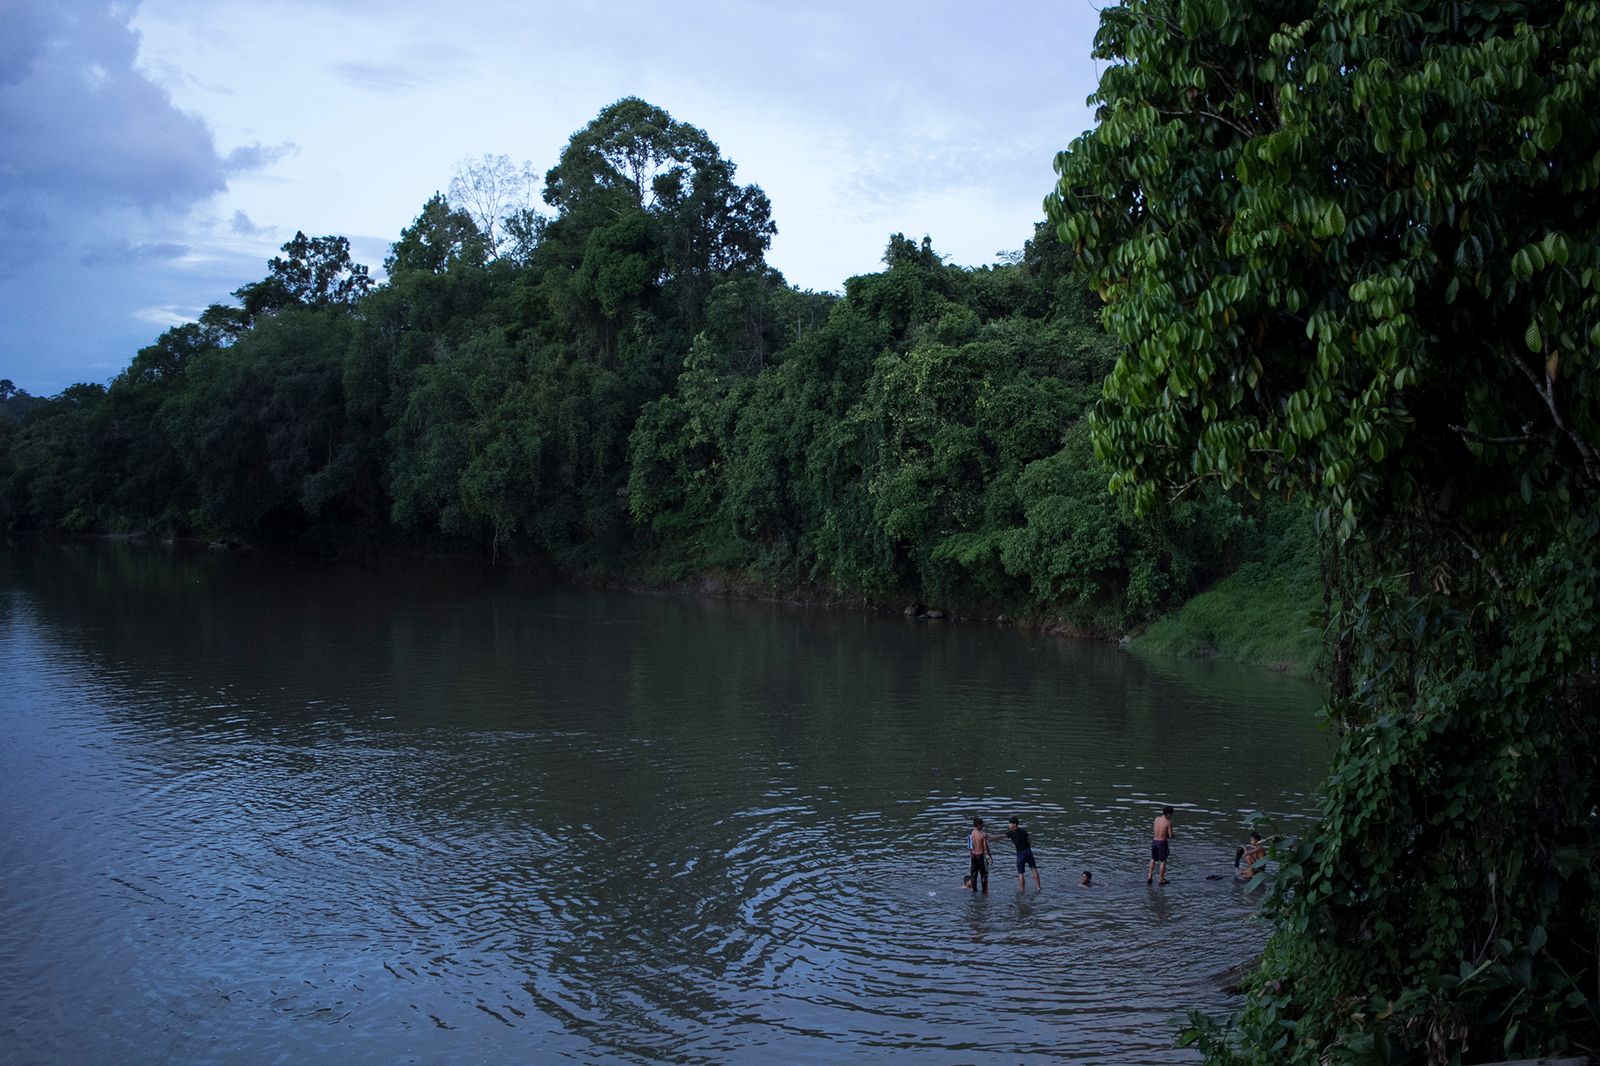 © Michael Eko - Children take a bath by the Malinau River, North Kalimantan Province of Indonesia, 2020.